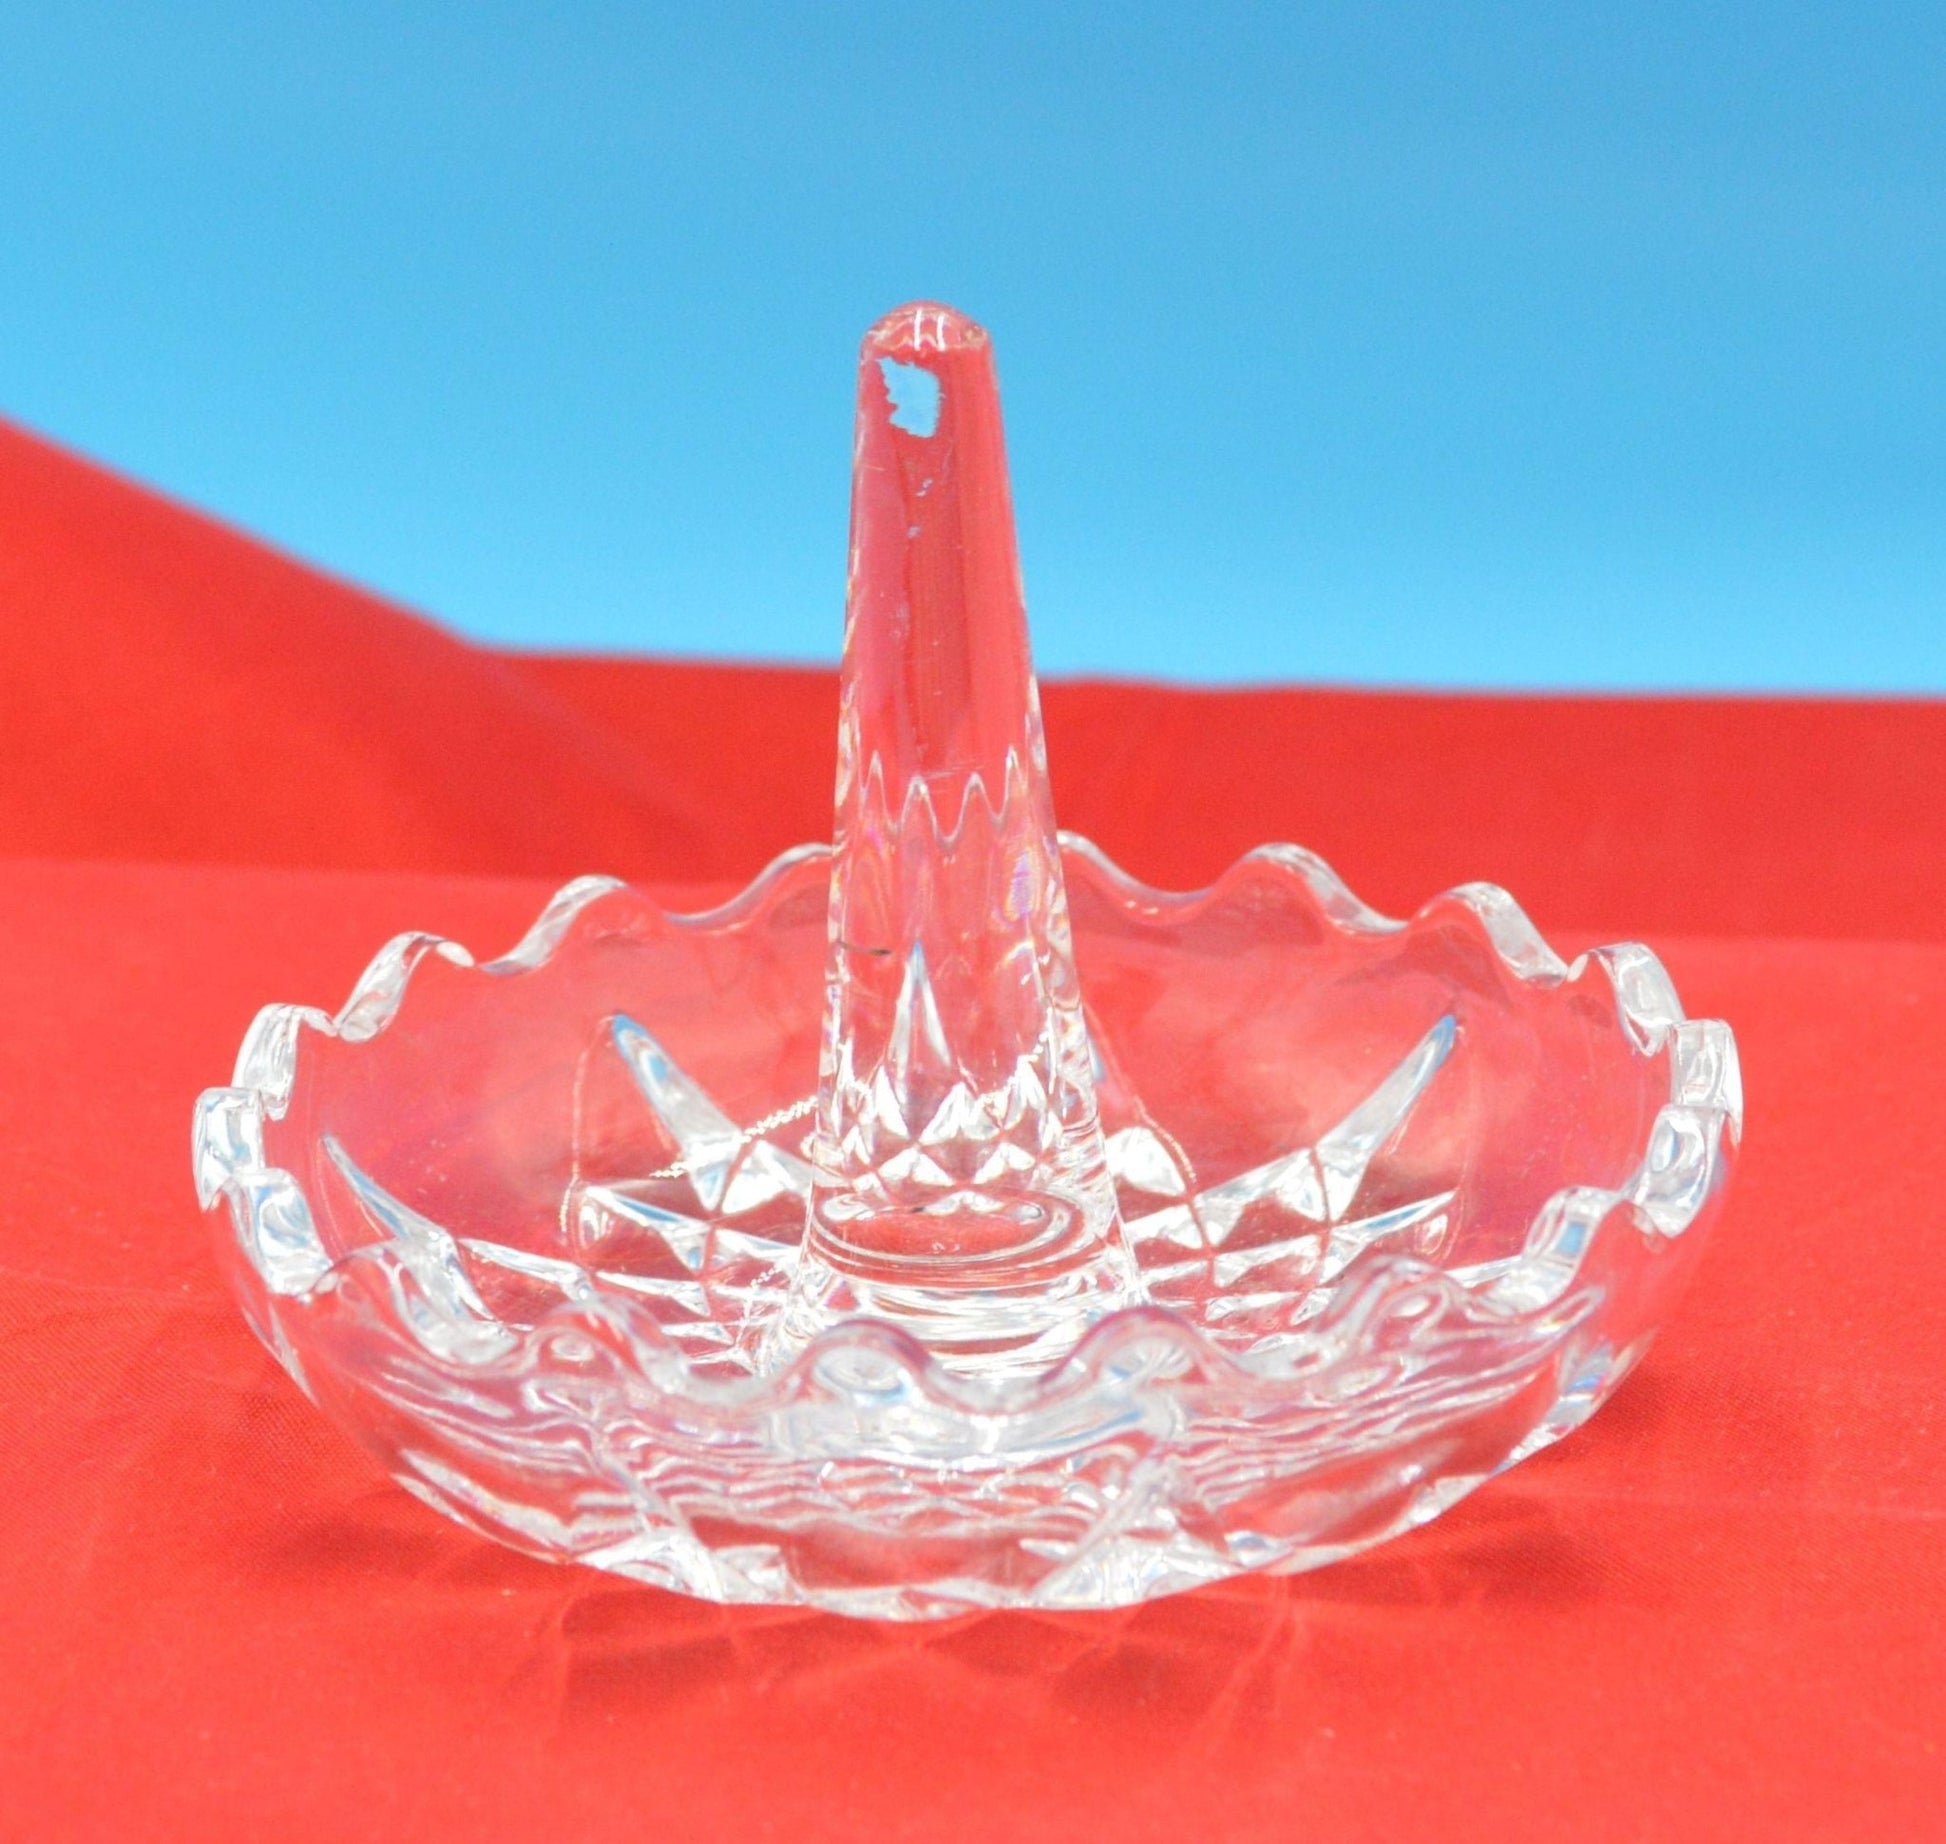 CUT GLASS RING HOLDER TRINKET DISH - TMD167207